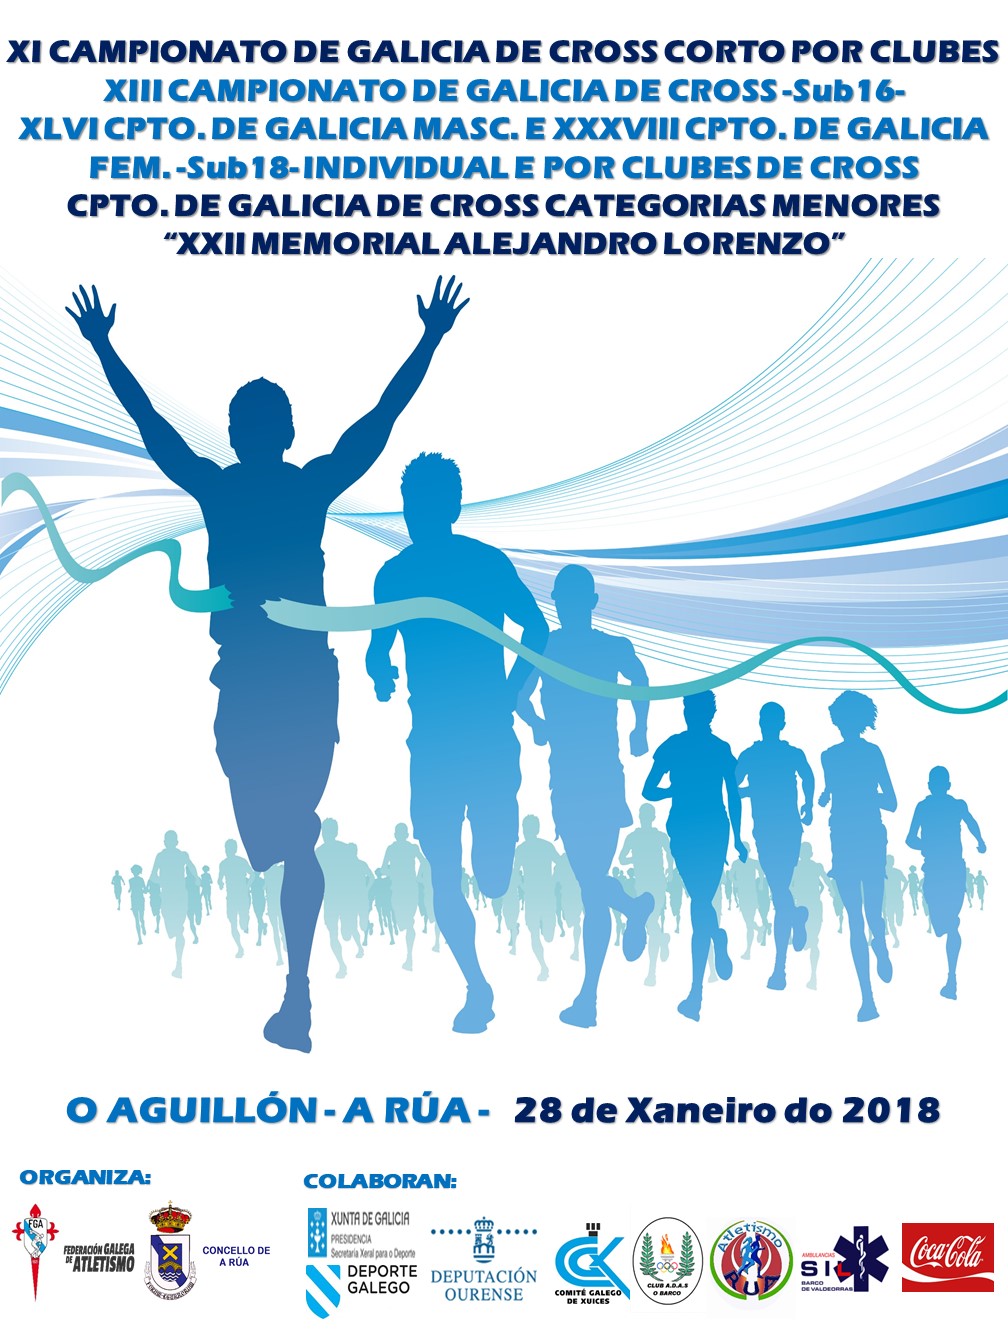 XIII Campionato de Galicia Sub16 (CAD) – XLVI Sub18 (XUV) H – XXXVIII Sub18 (XUV) M Individual e Clubs de Campo a Través